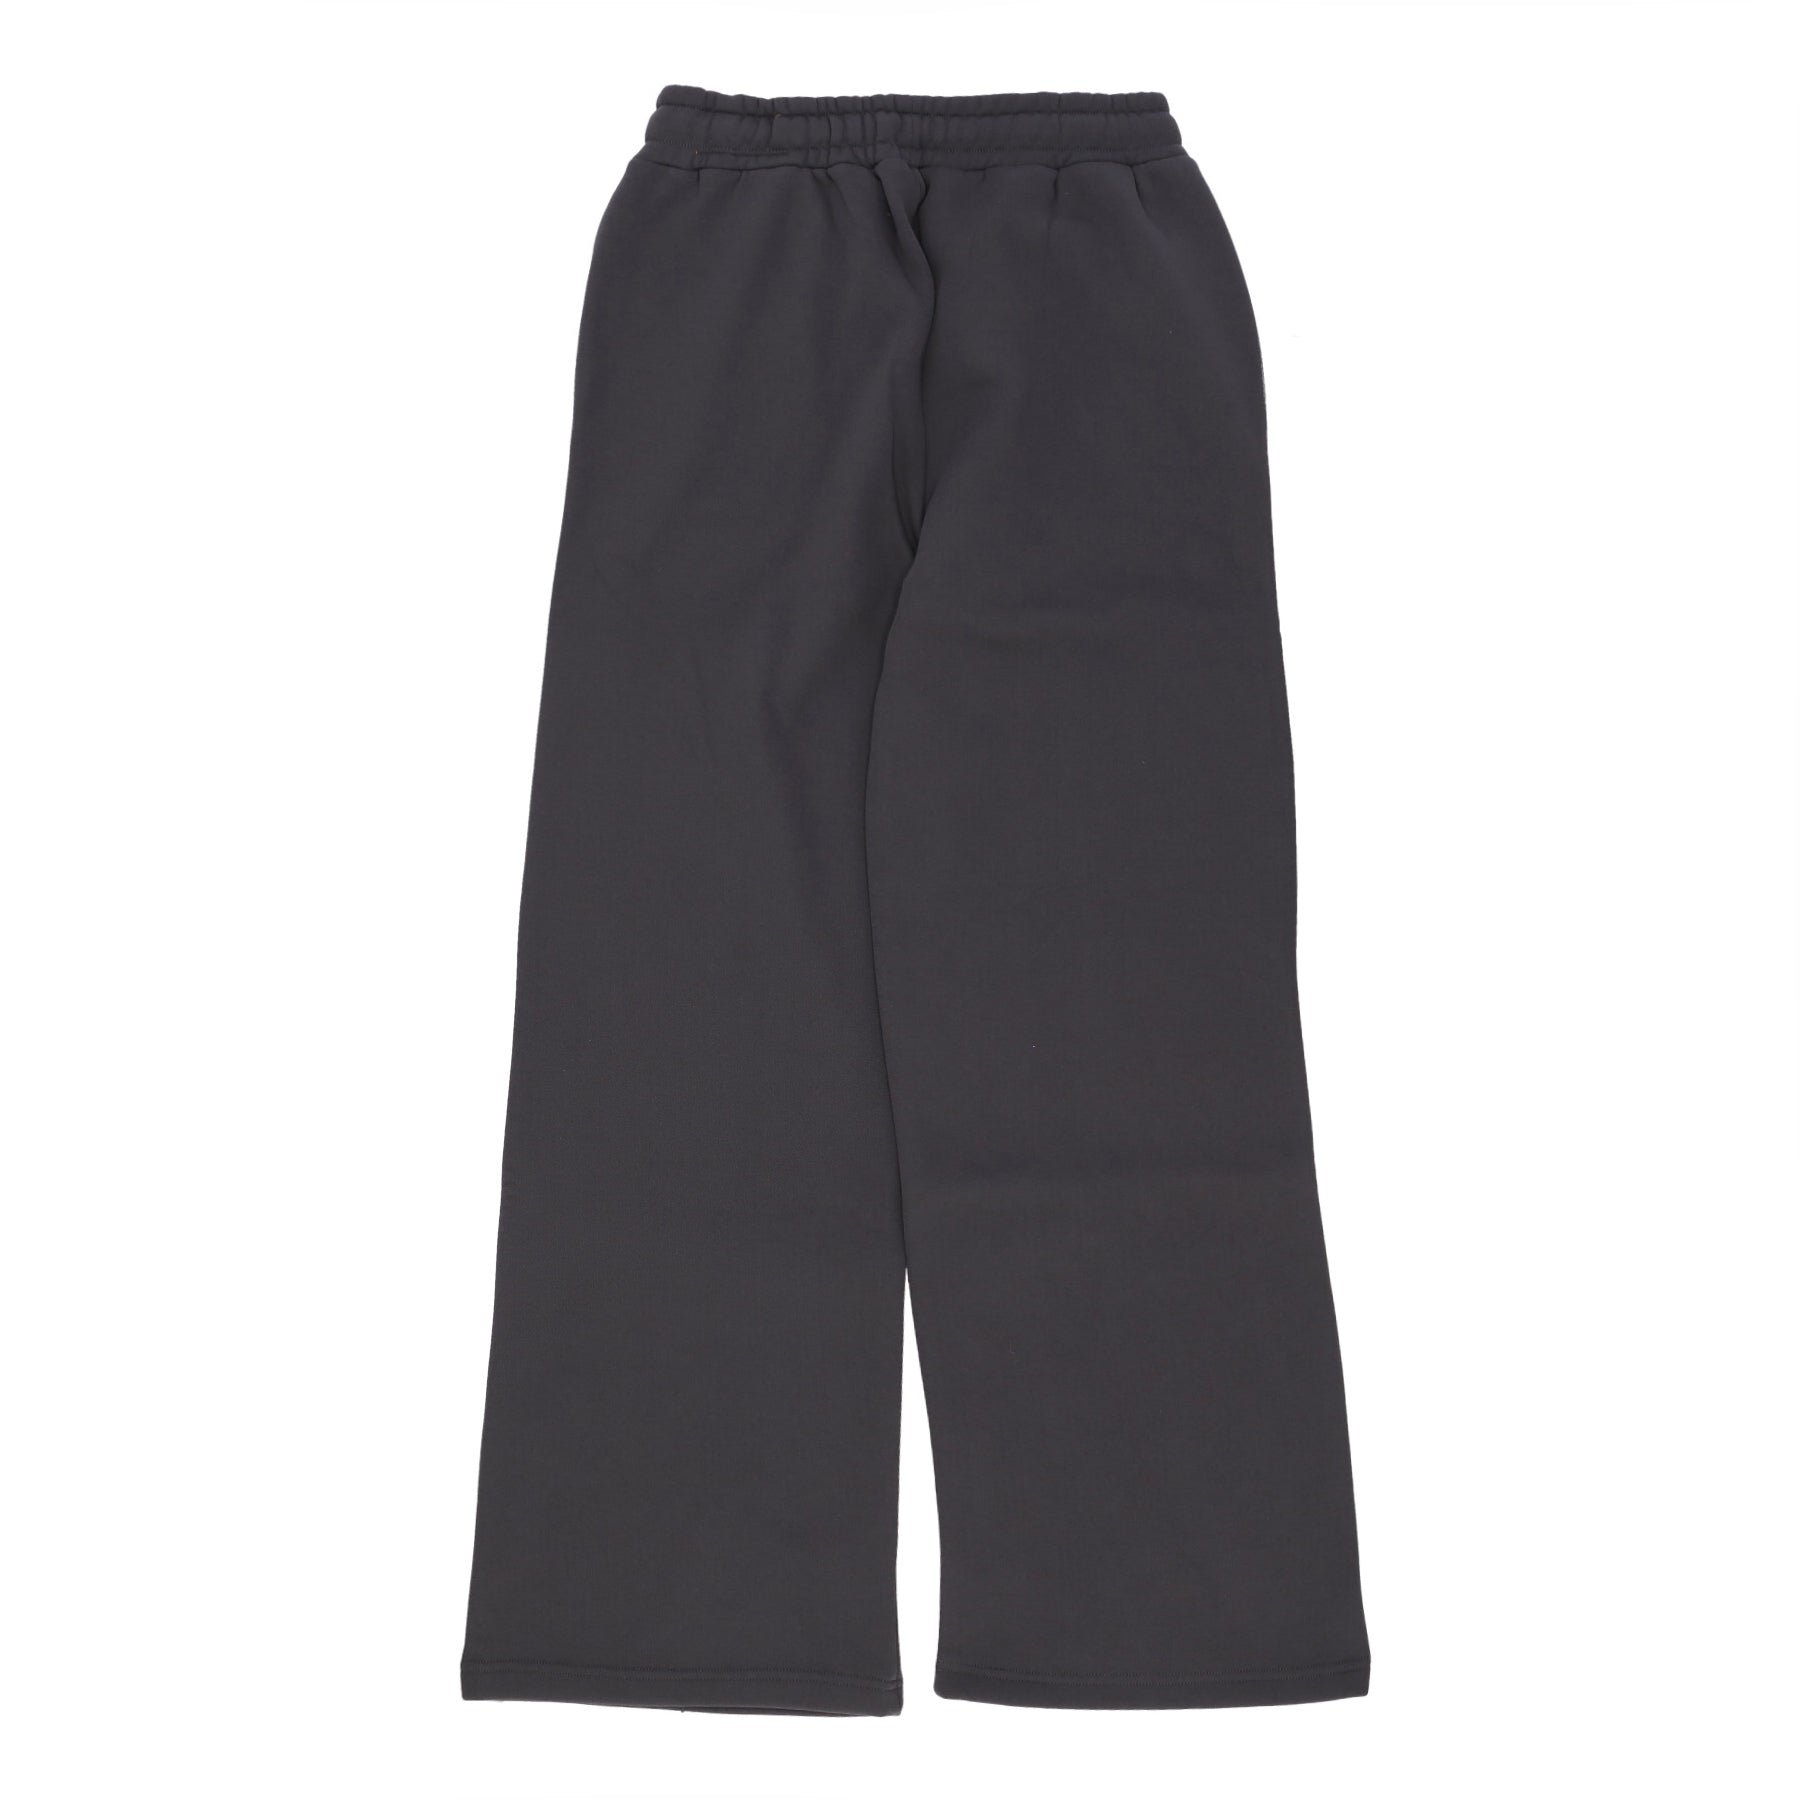 Pantalone Tuta Felpato Donna X-fit Label Wide Jogger Vintage Grey 138051